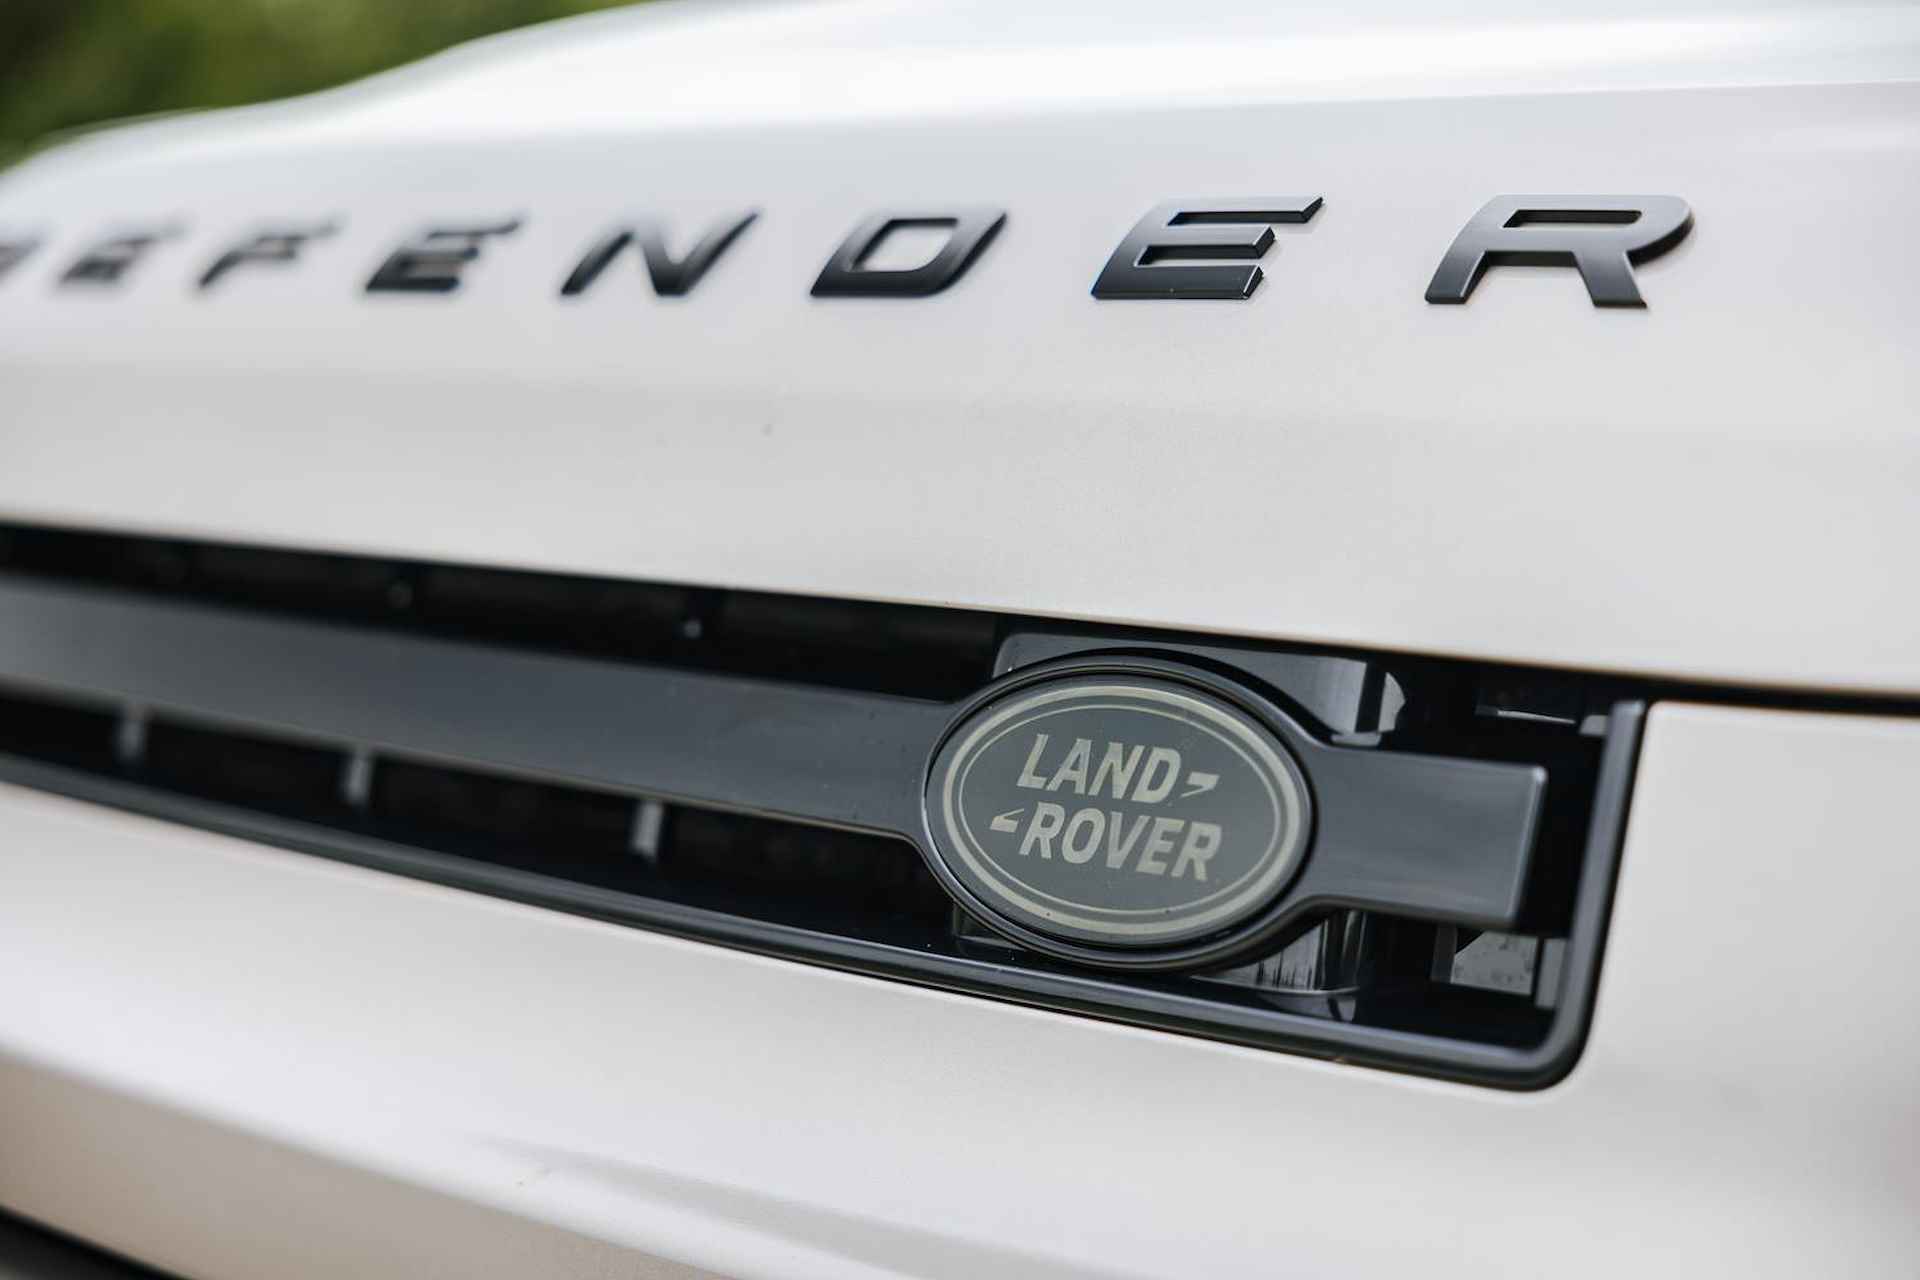 Land Rover Defender 2.0 P400e 110 X-Dynamic HSE | Panoramadak | 22" Velgen in Gloss Black | 11,4" Touch Screen | Cold Climate Pack | Elektrische Trekhaak | Expedition imperiaal | Uitklapbare Dakladder| All Season Banden - 34/43